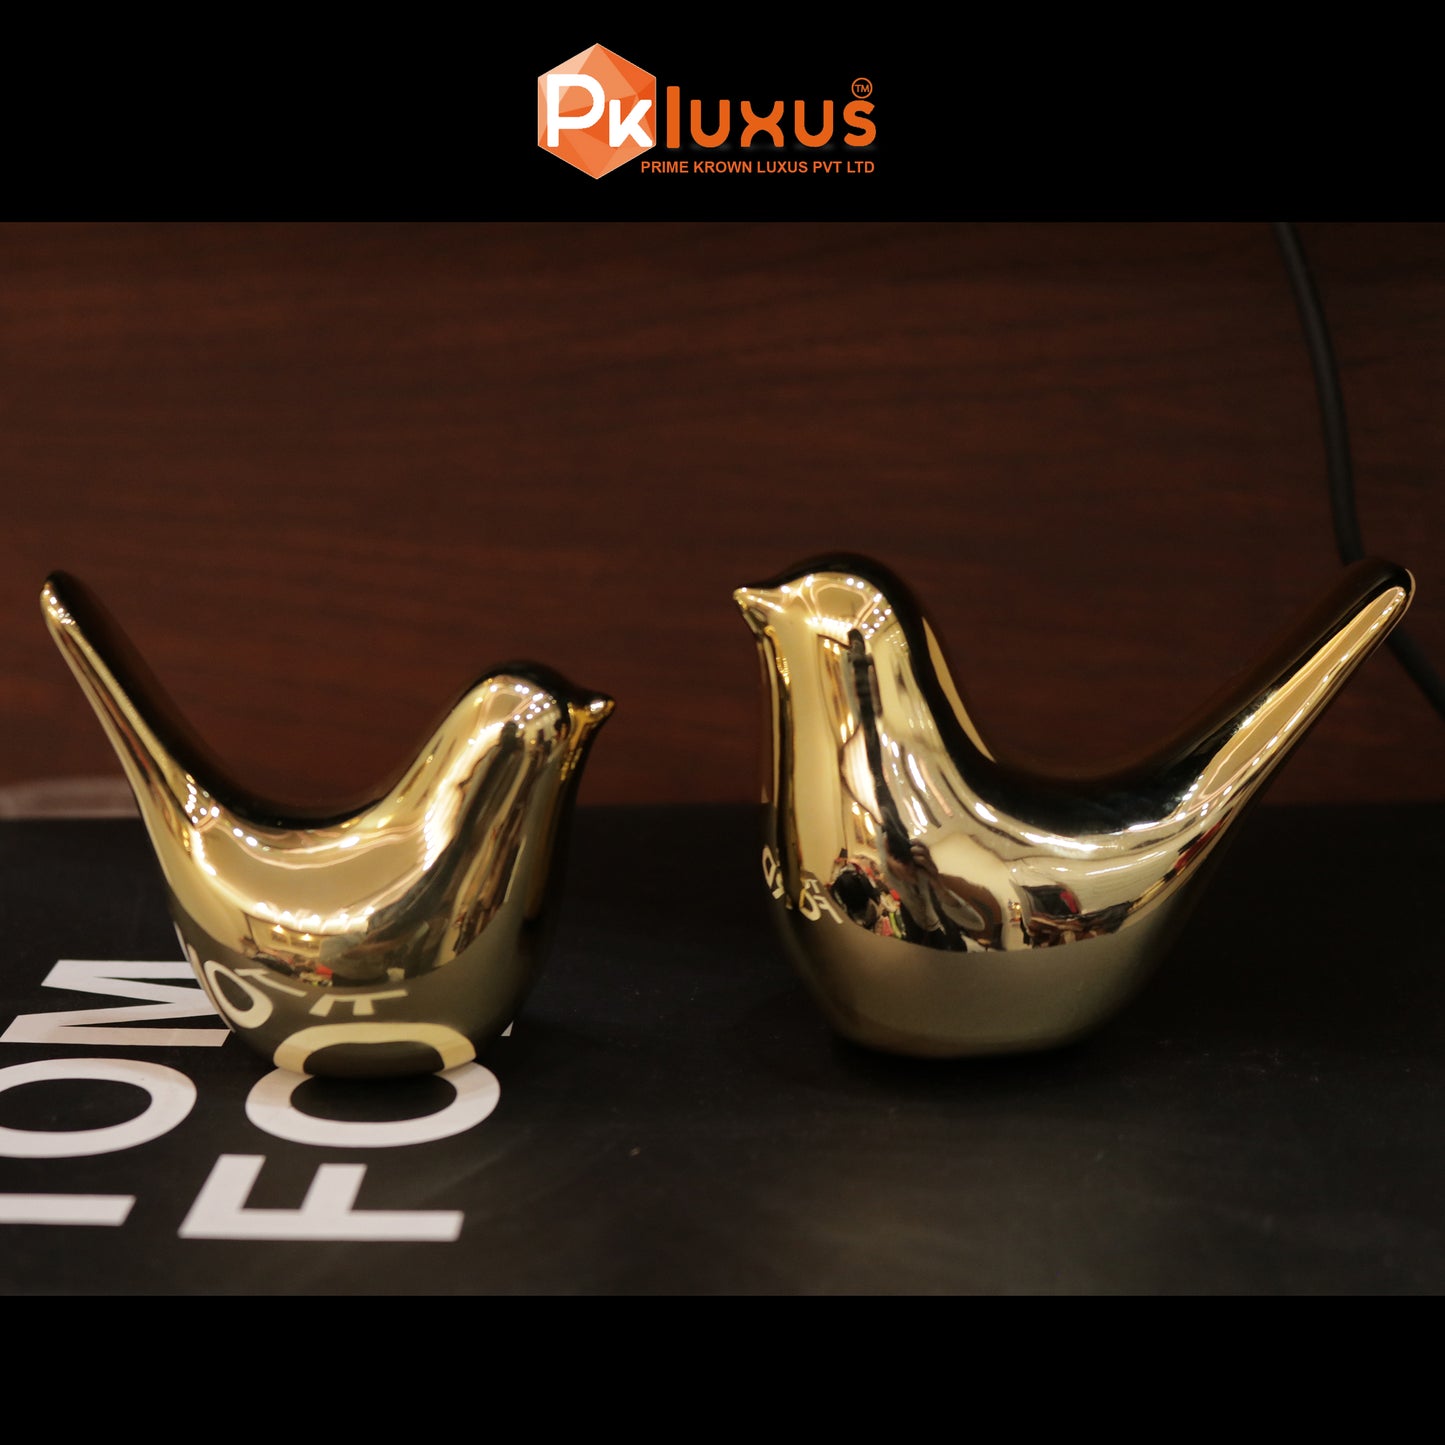 Set Of 4 Luxury Decor Arrangements For Home & Office | PK LUXUS™ - PK LUXUS